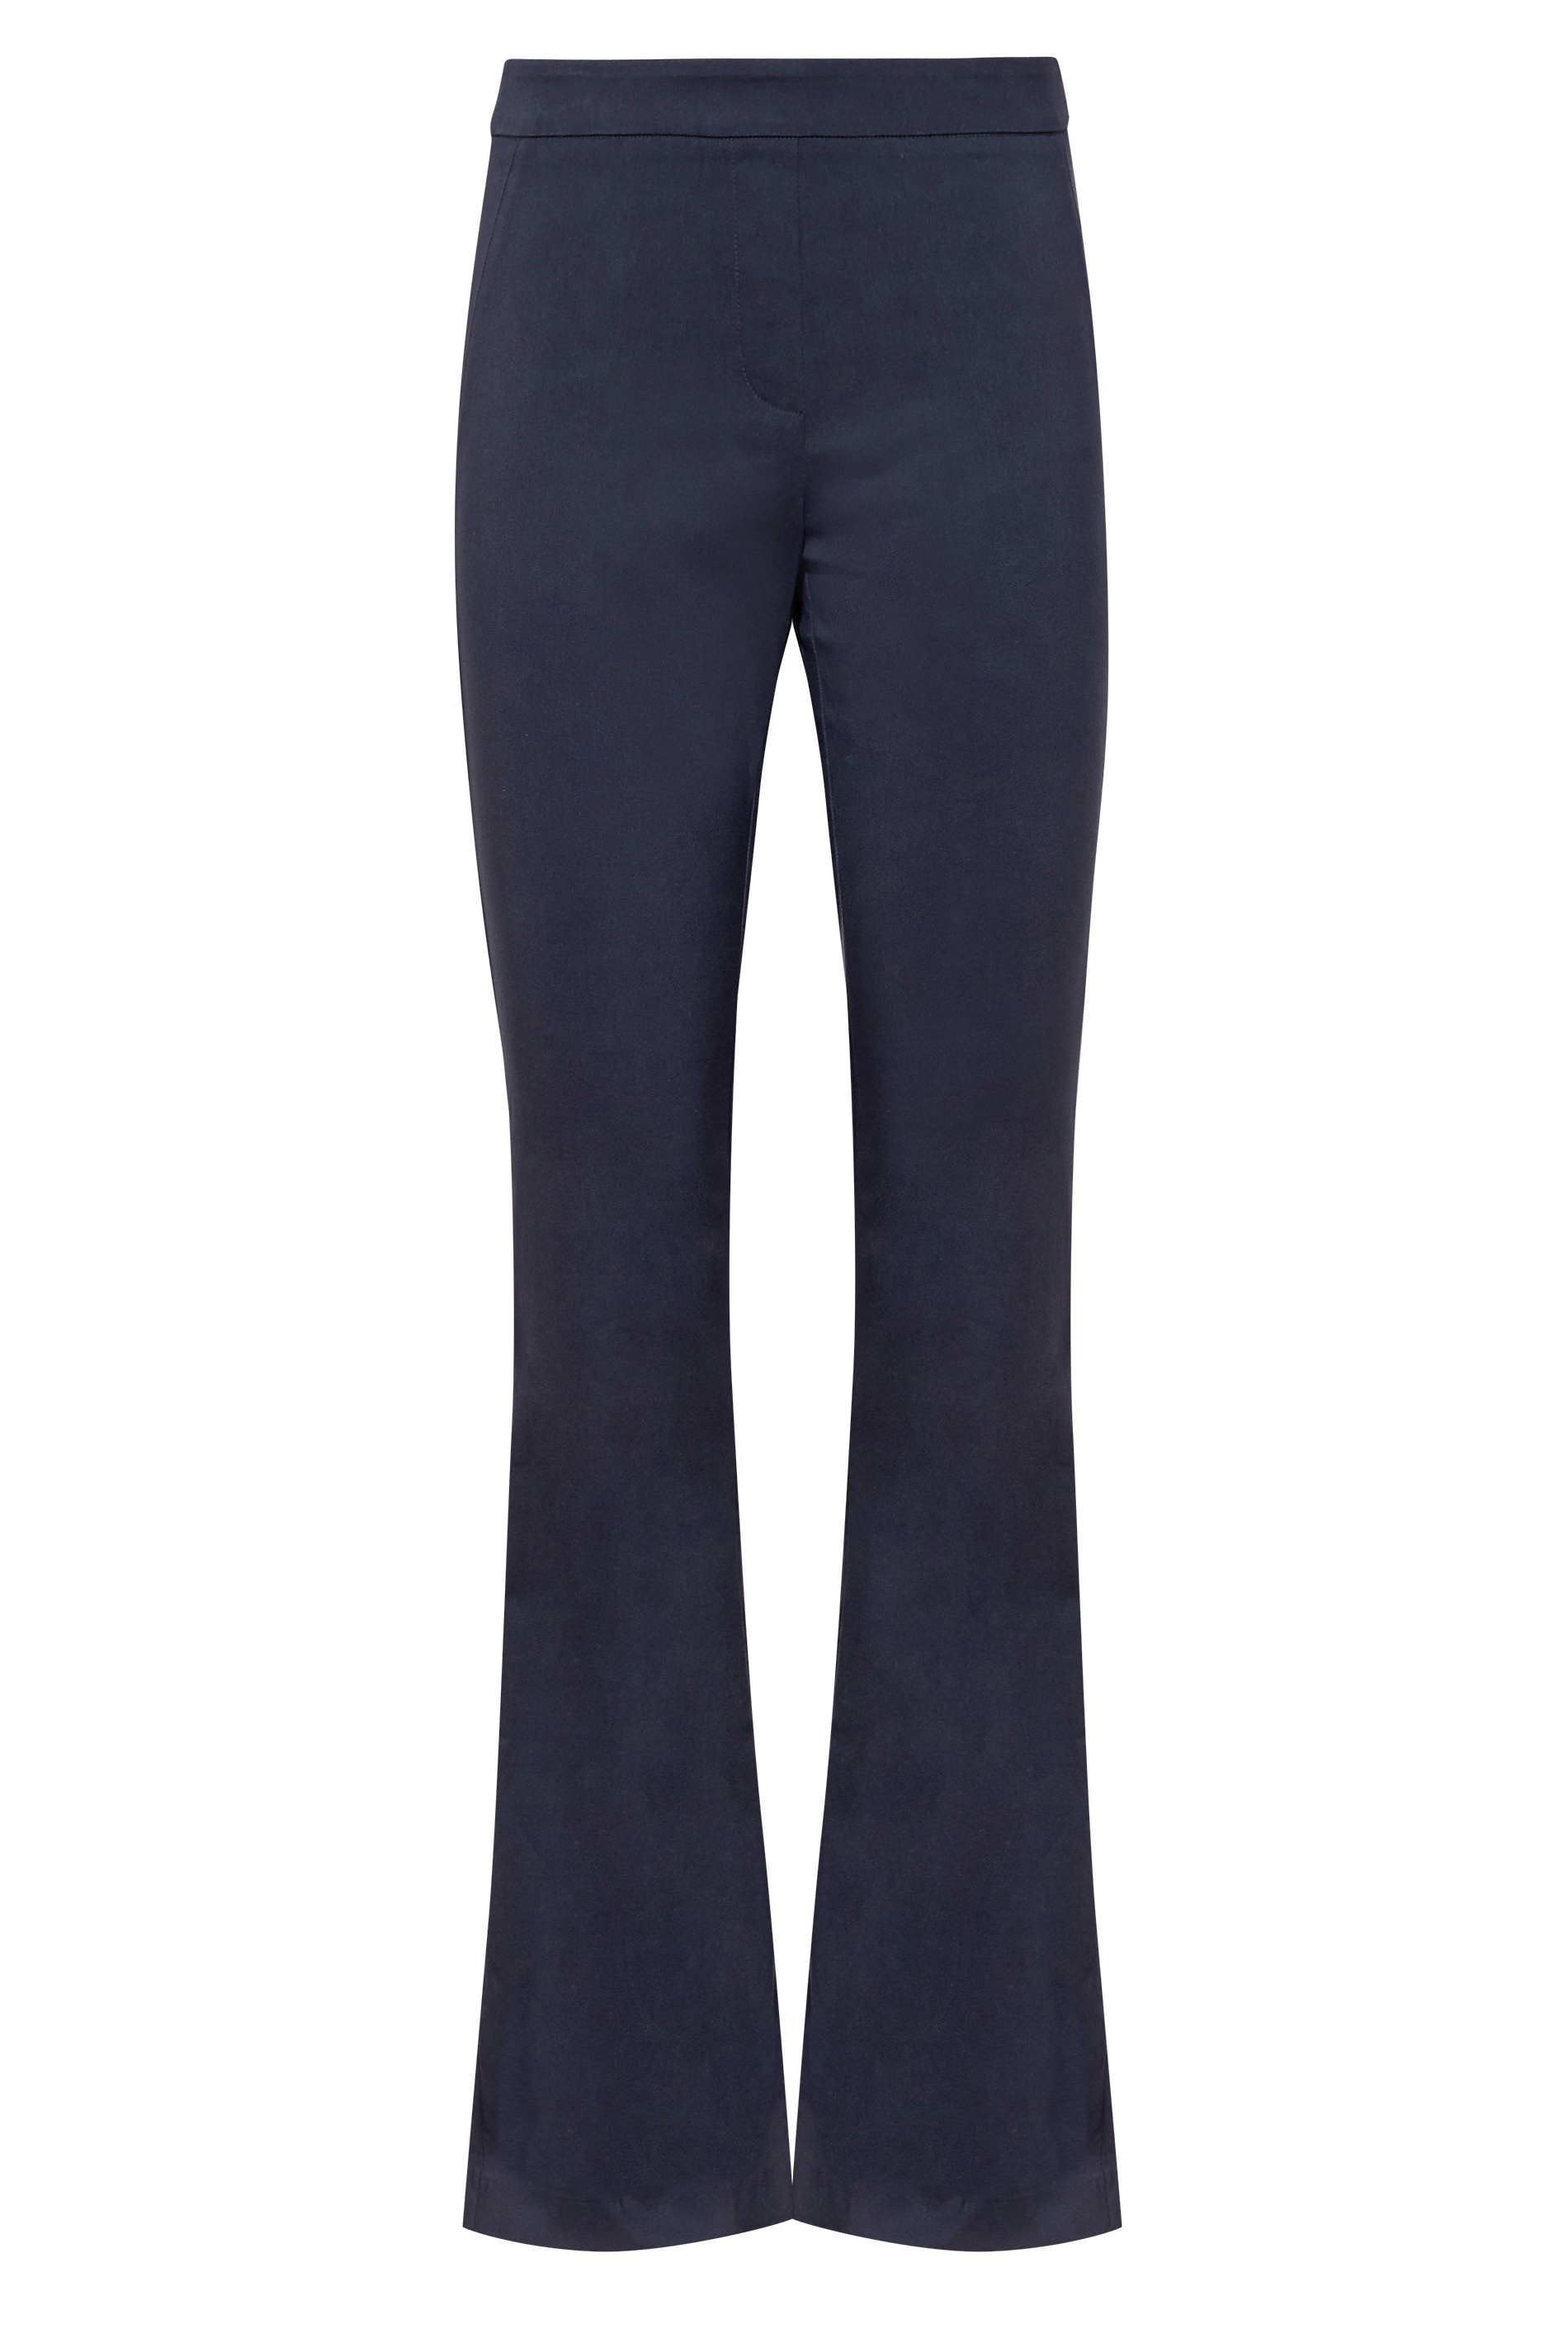 LTS Tall Women's Navy Blue Bi Stretch Bootcut Trousers | Long Tall Sally 1